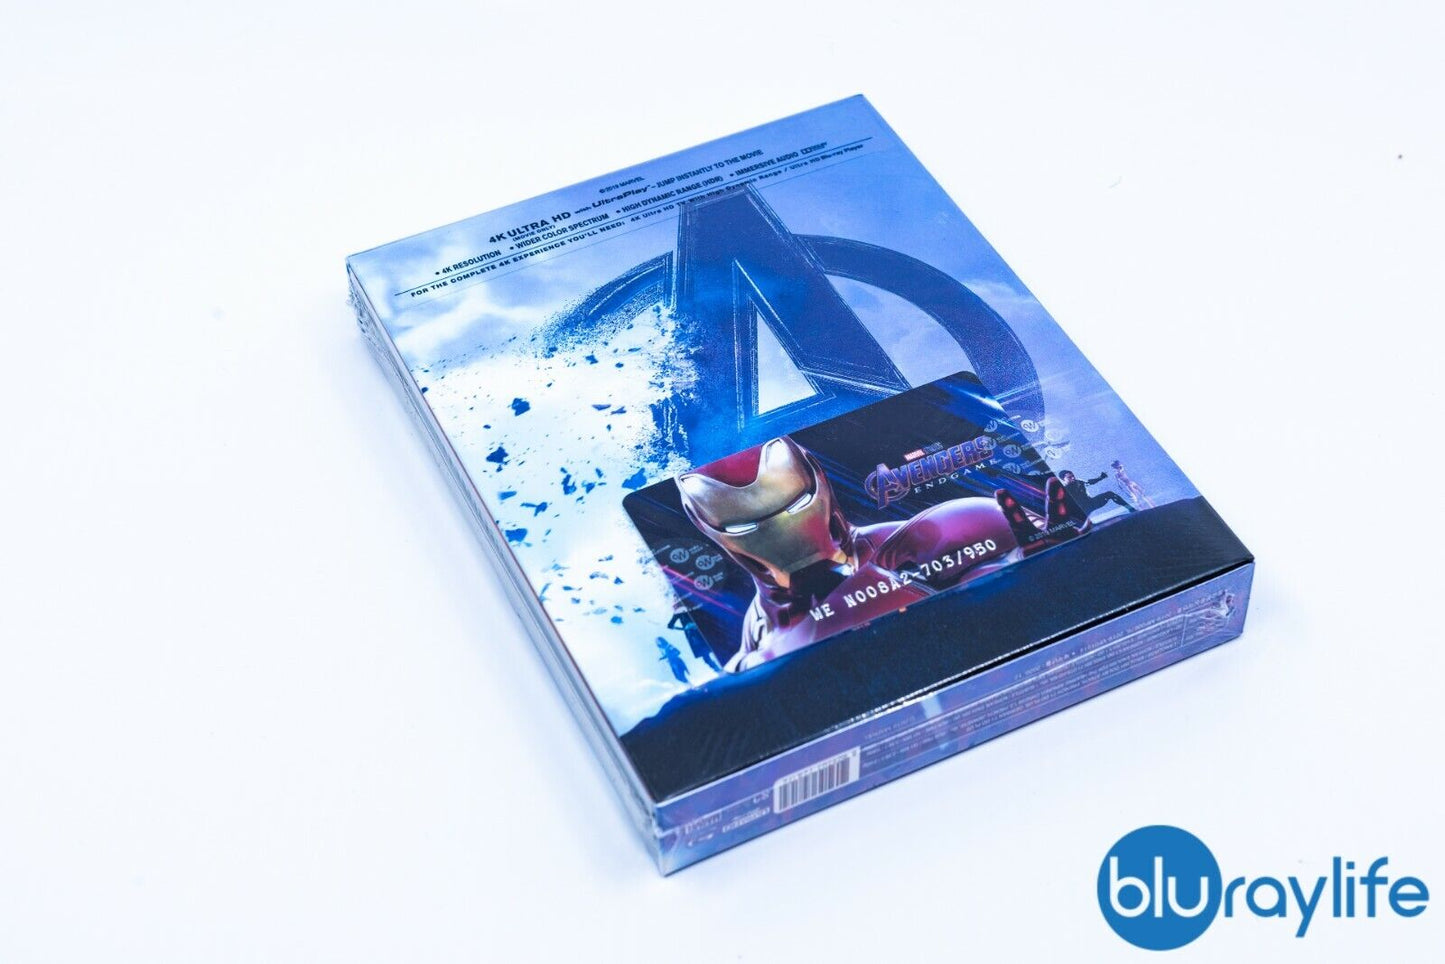 Avengers: Endgame 4K+2D Blu-ray Steelbook WeET Collection #8 Full Slip A2